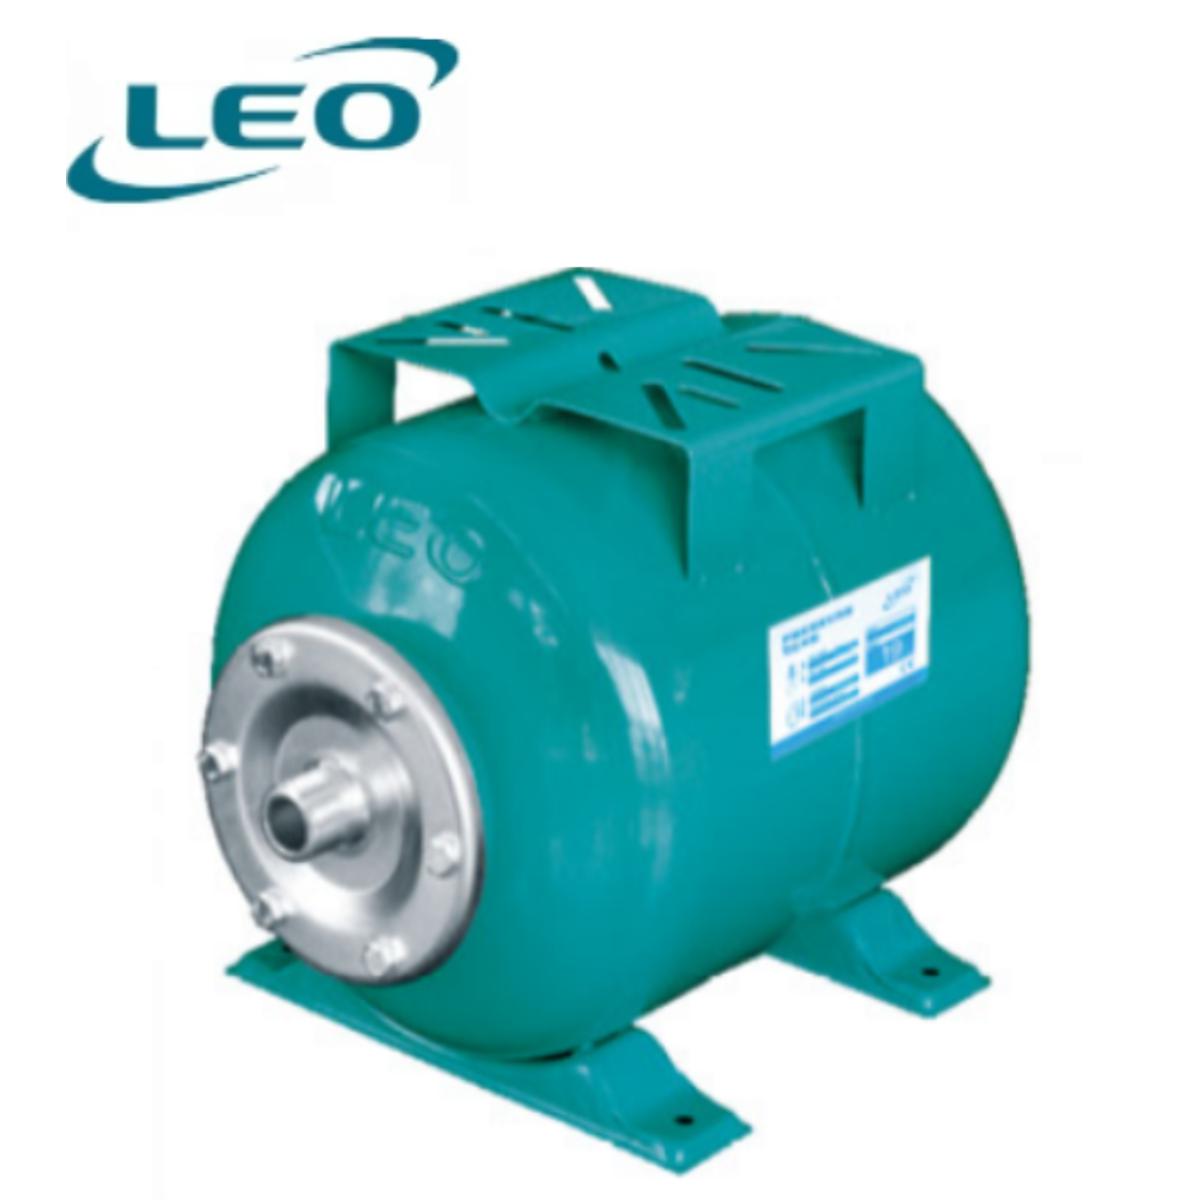 LEO - 50CTI -  50 LTR PRESSURE TANK HORIZONTAL FOR Water Pump ( TANK ONLY )